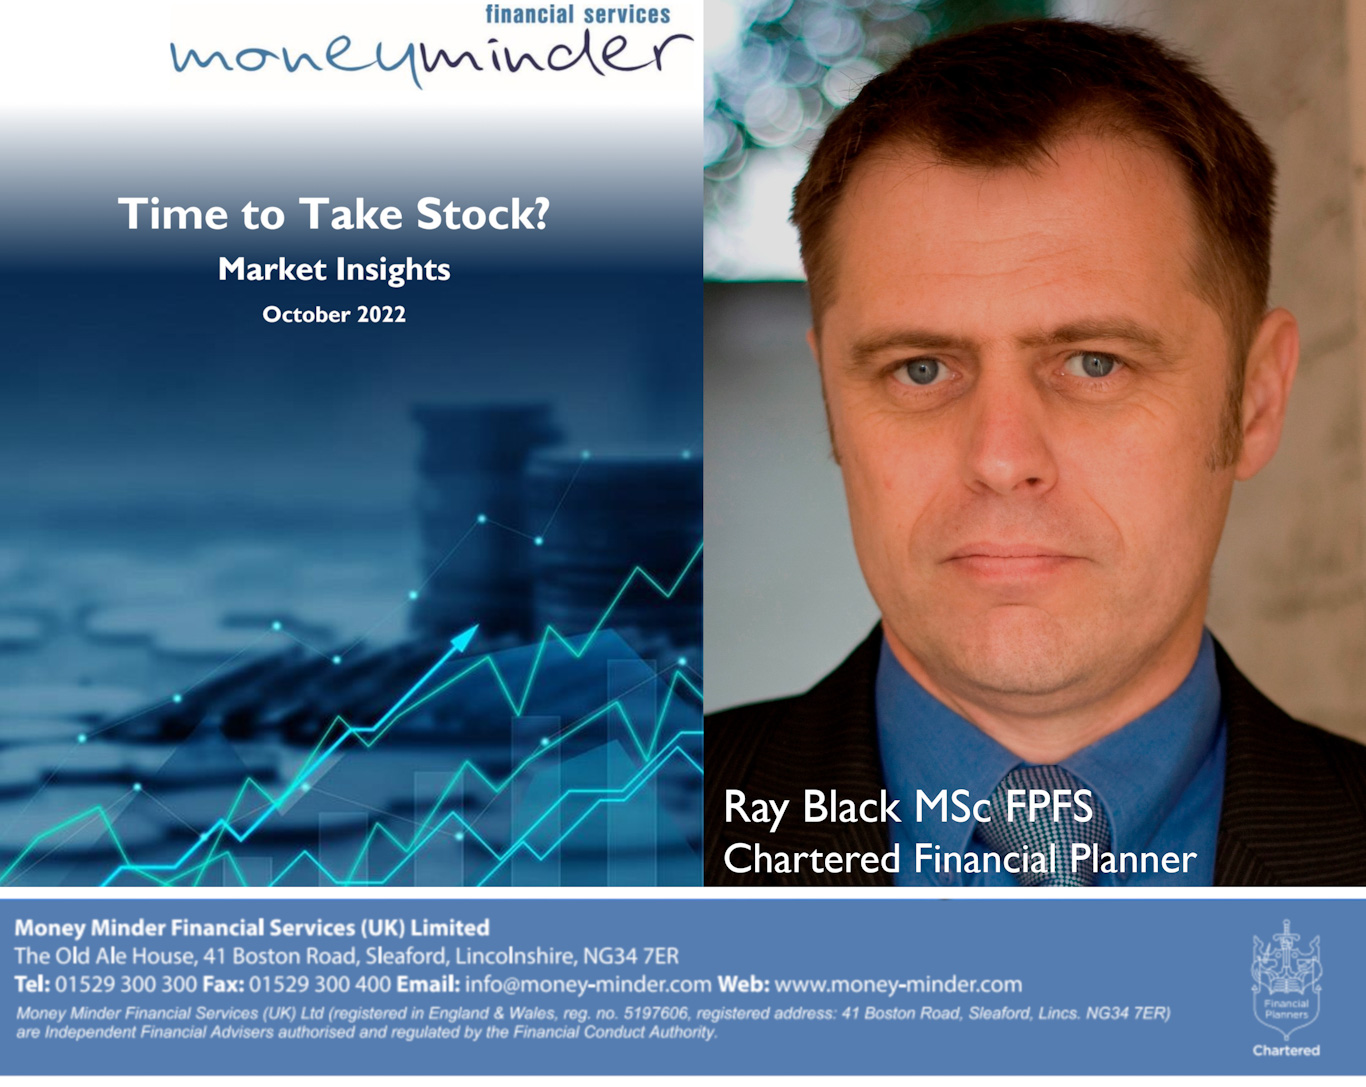 Time to take stock? 'Money Minder's Market Insight' Autumn 2022 #WednesdayWisdom